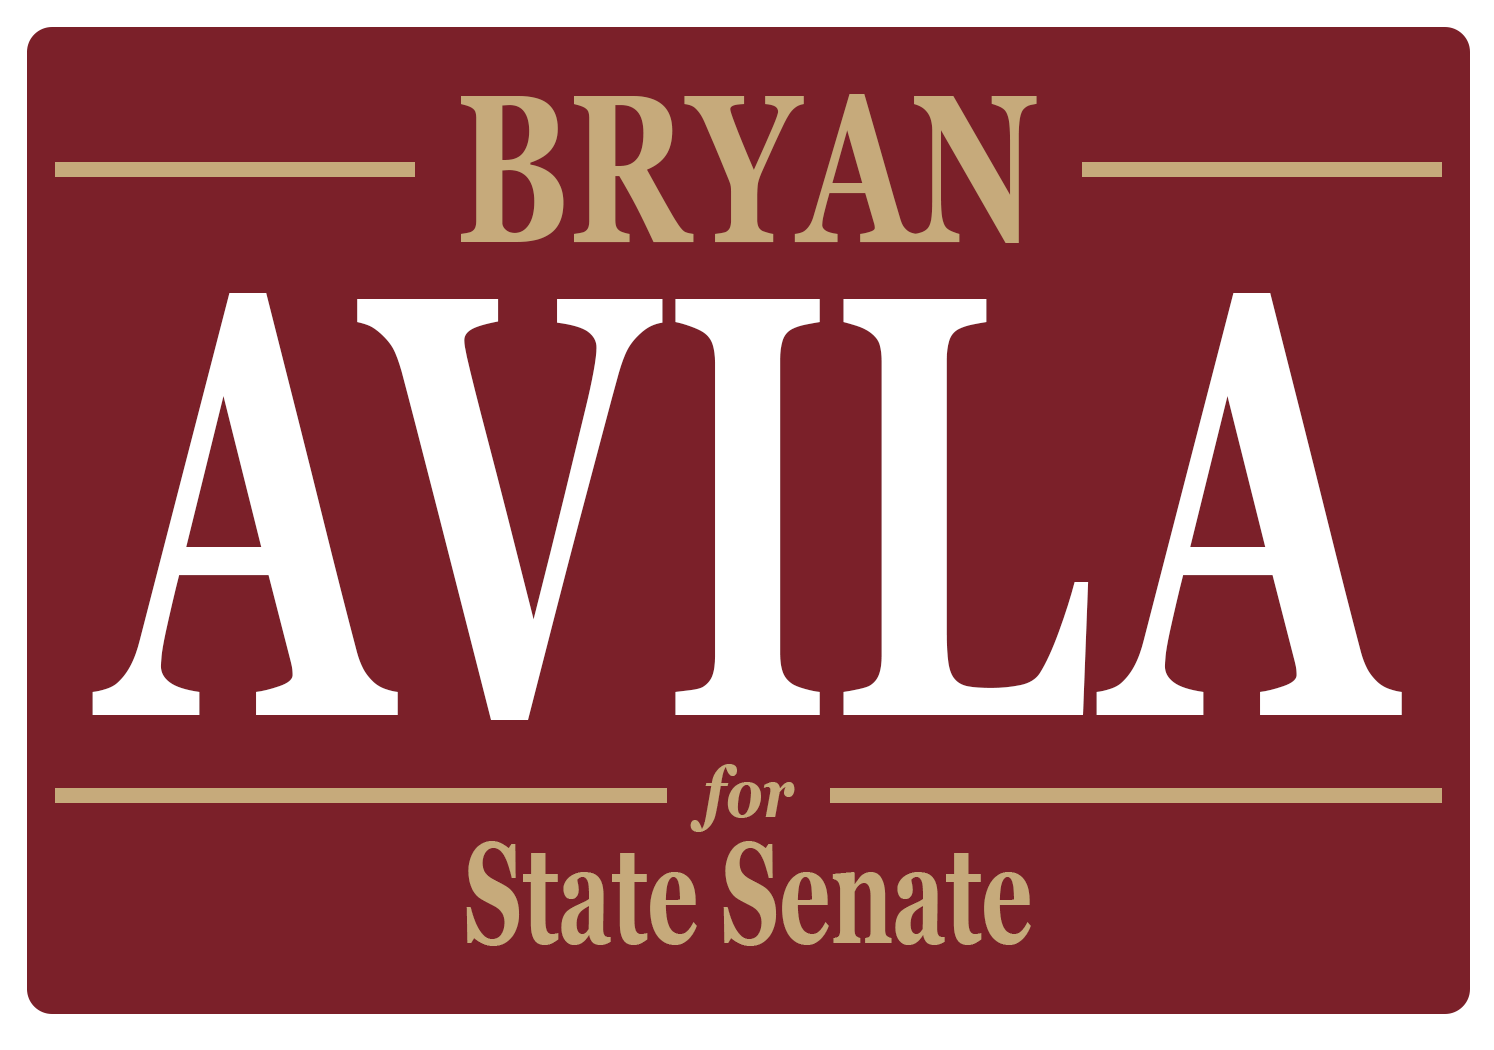 Bryan Avila for State Senate